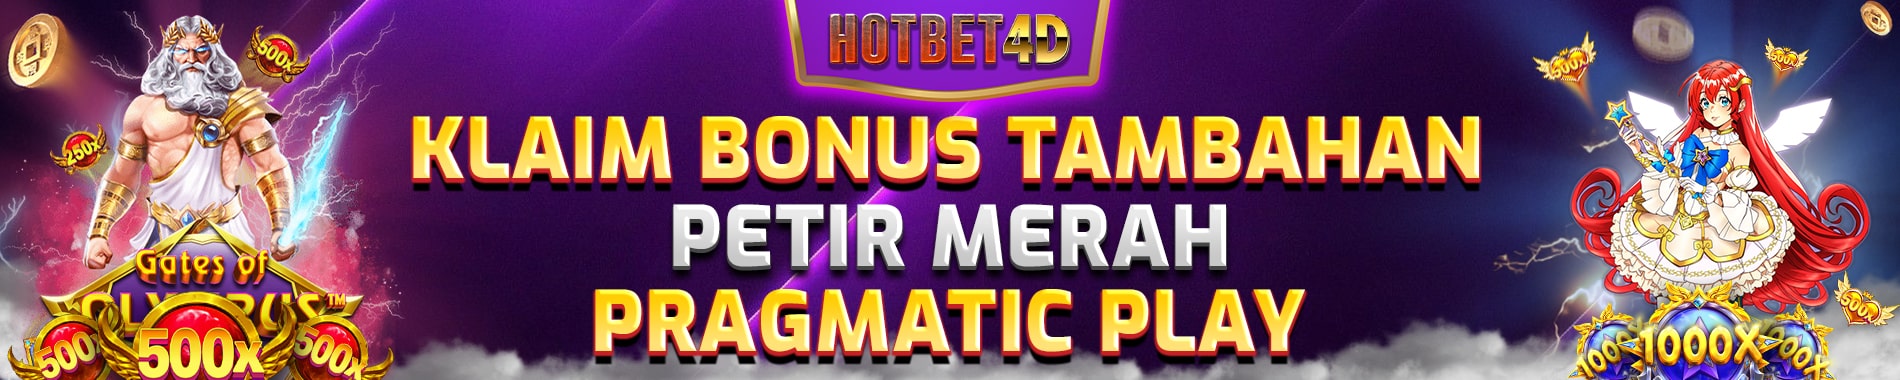 Hotbet4d | Event Petir Merah Pragmatic Play